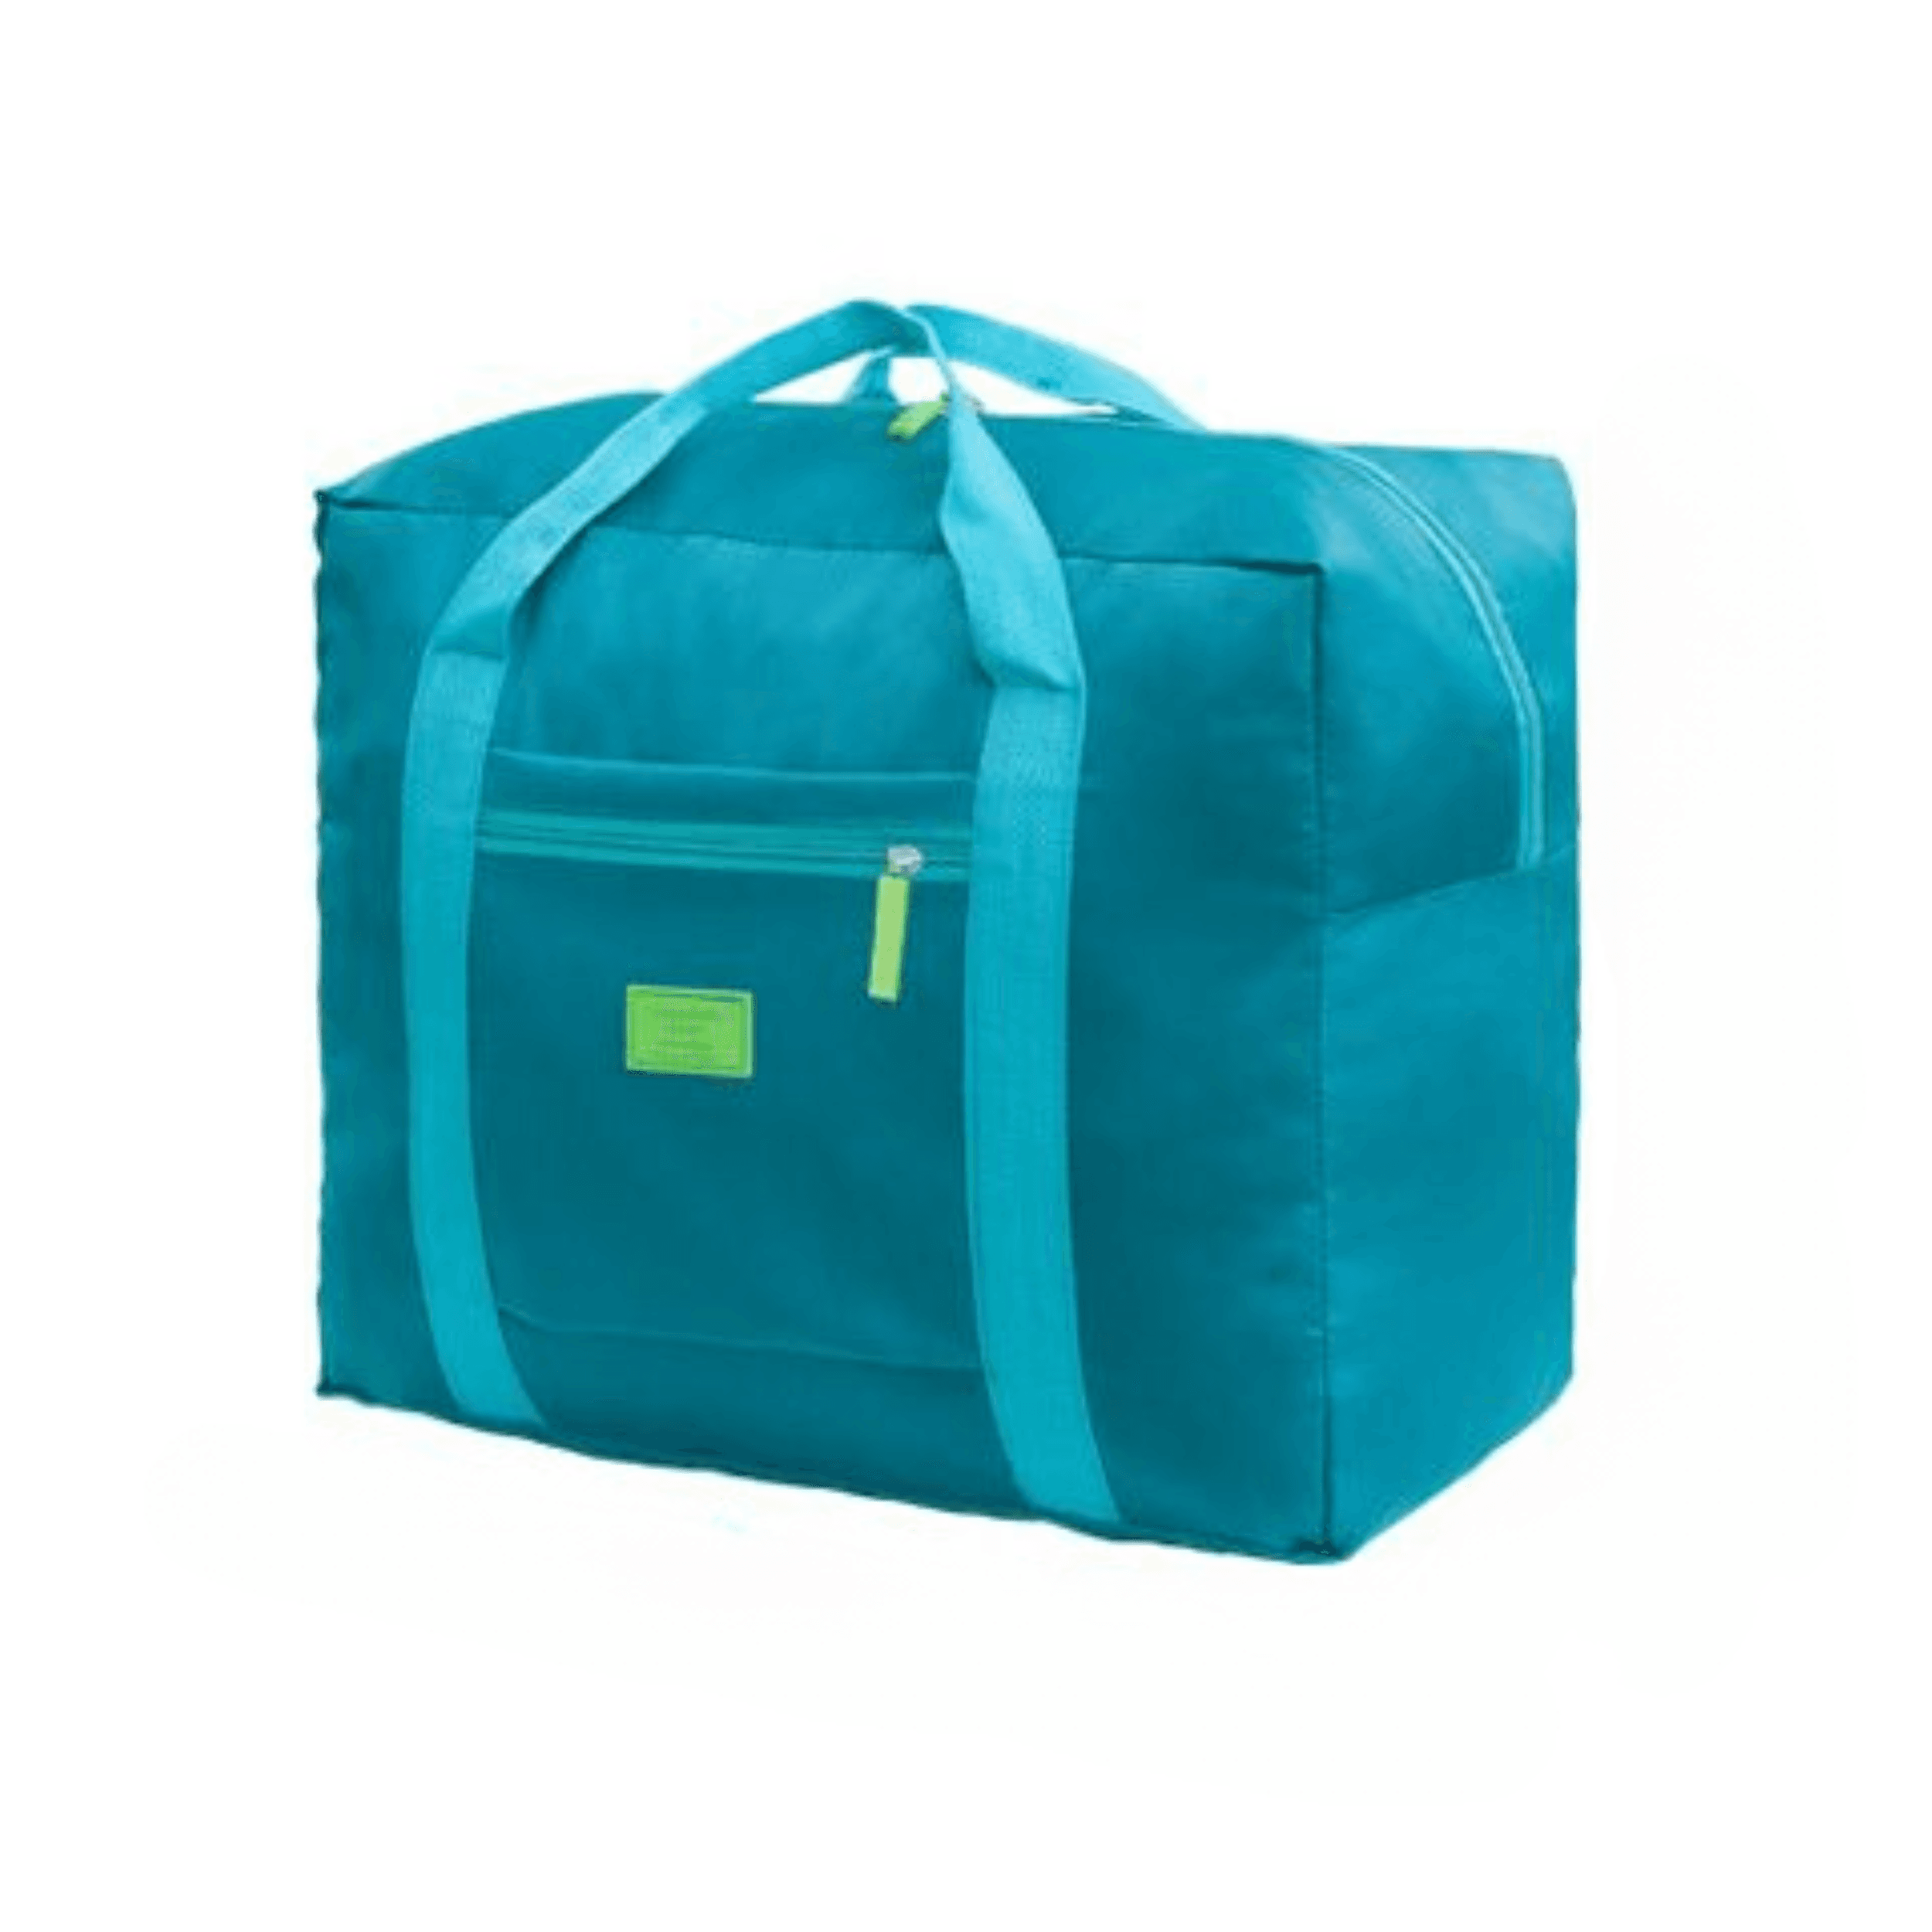 Classic travel, sports bag - light blue